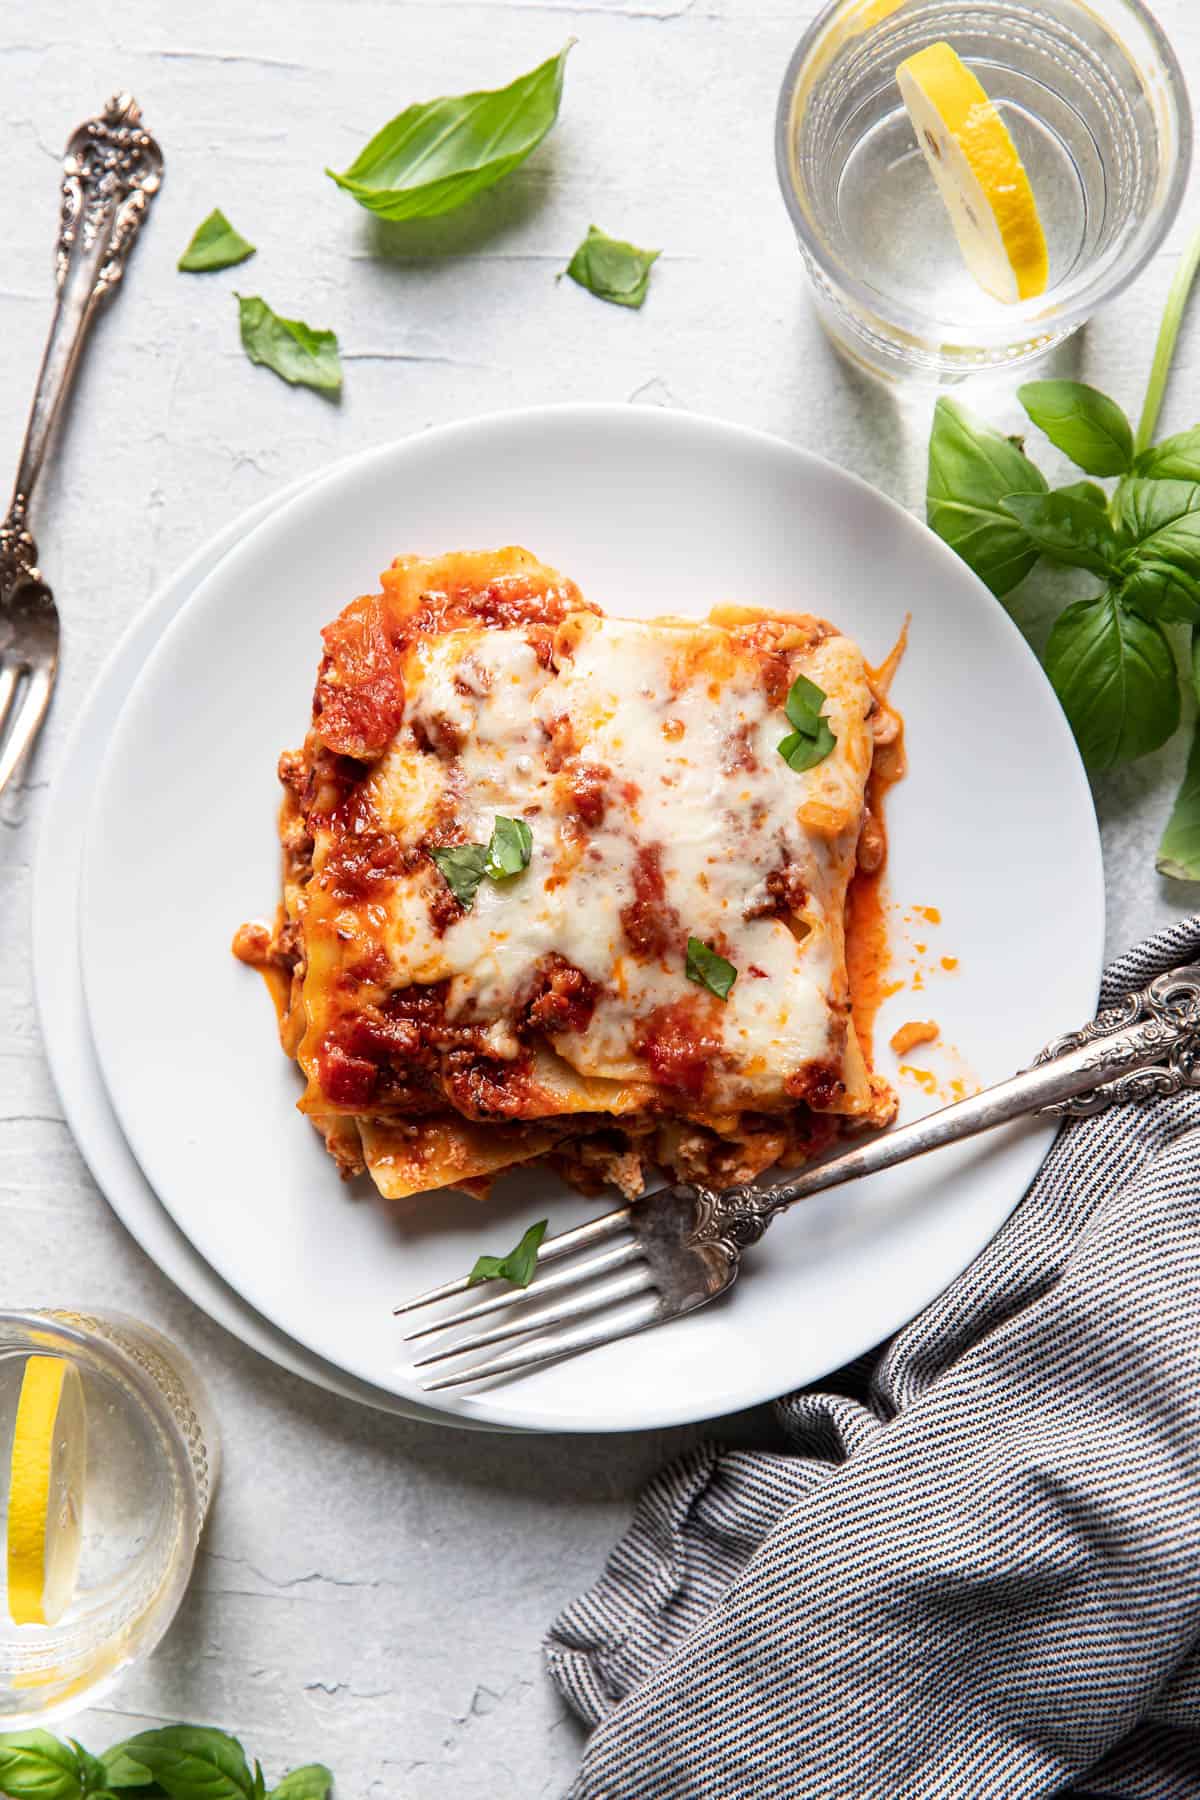 Homemade Lasagna (A Family Recipe) - Modern Crumb